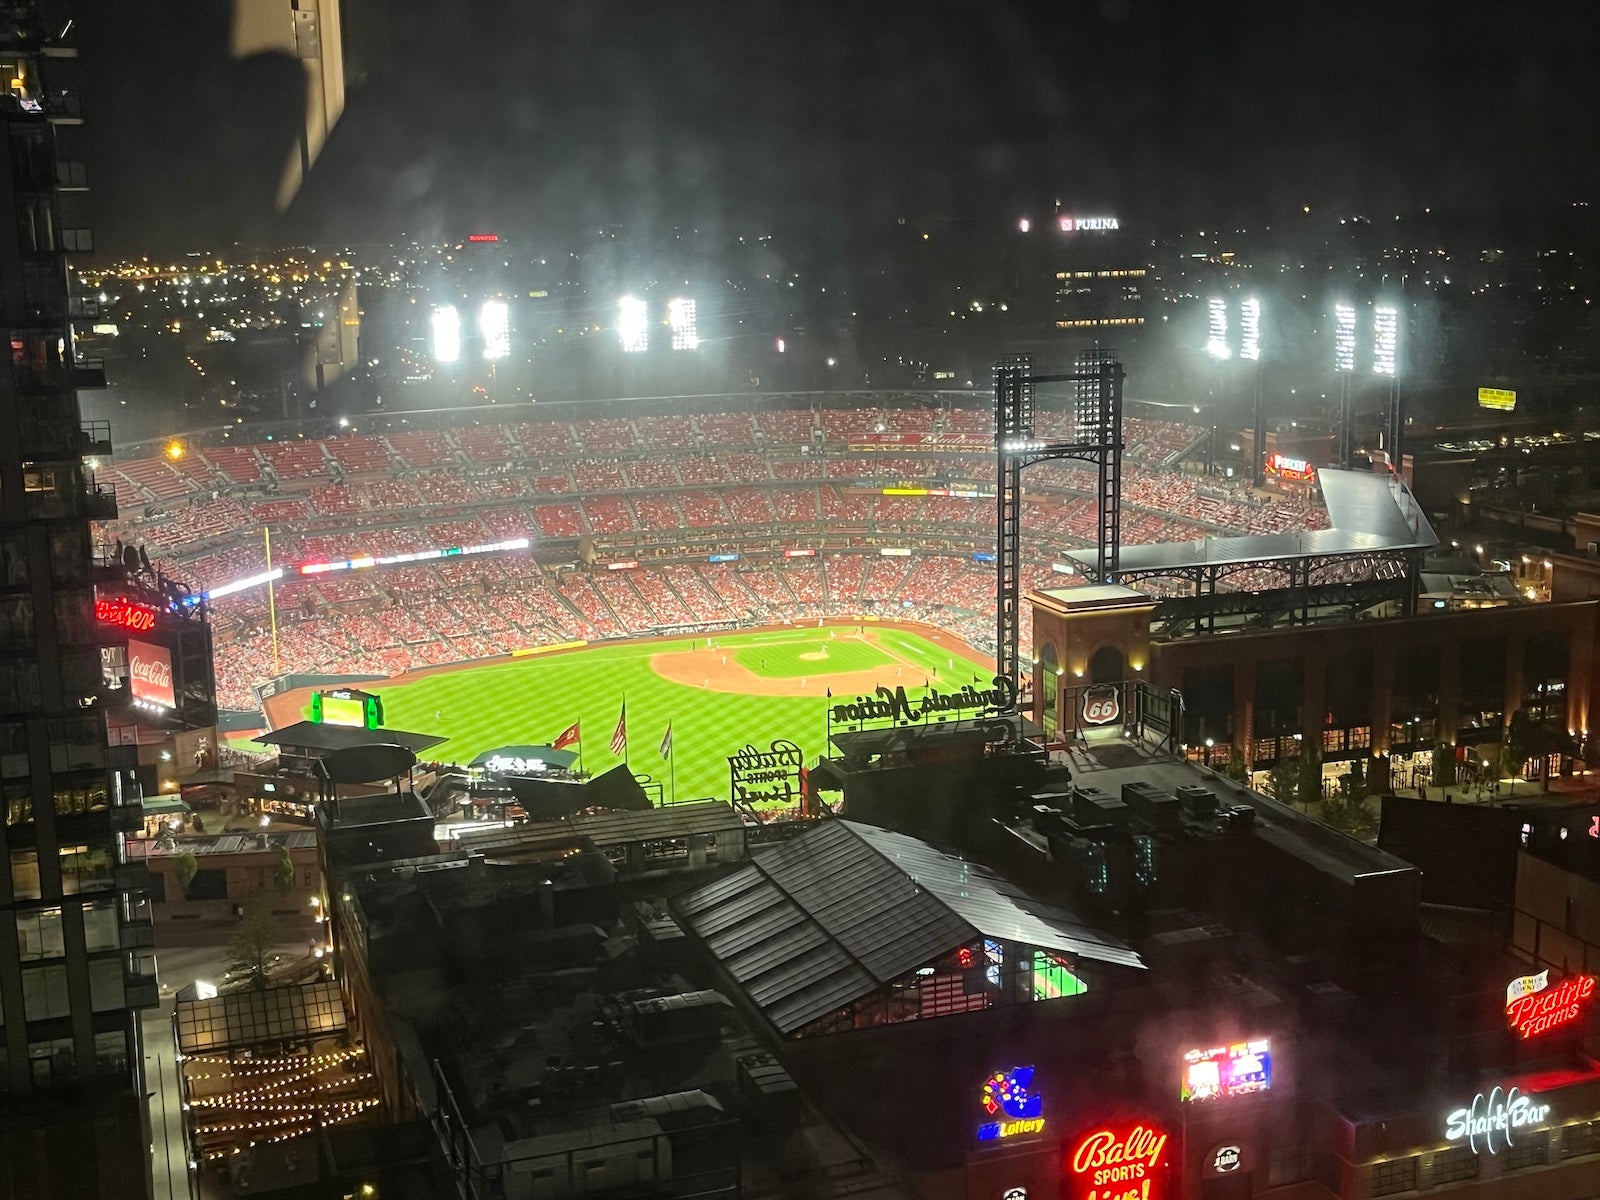 Hotels with MLB baseball stadium views